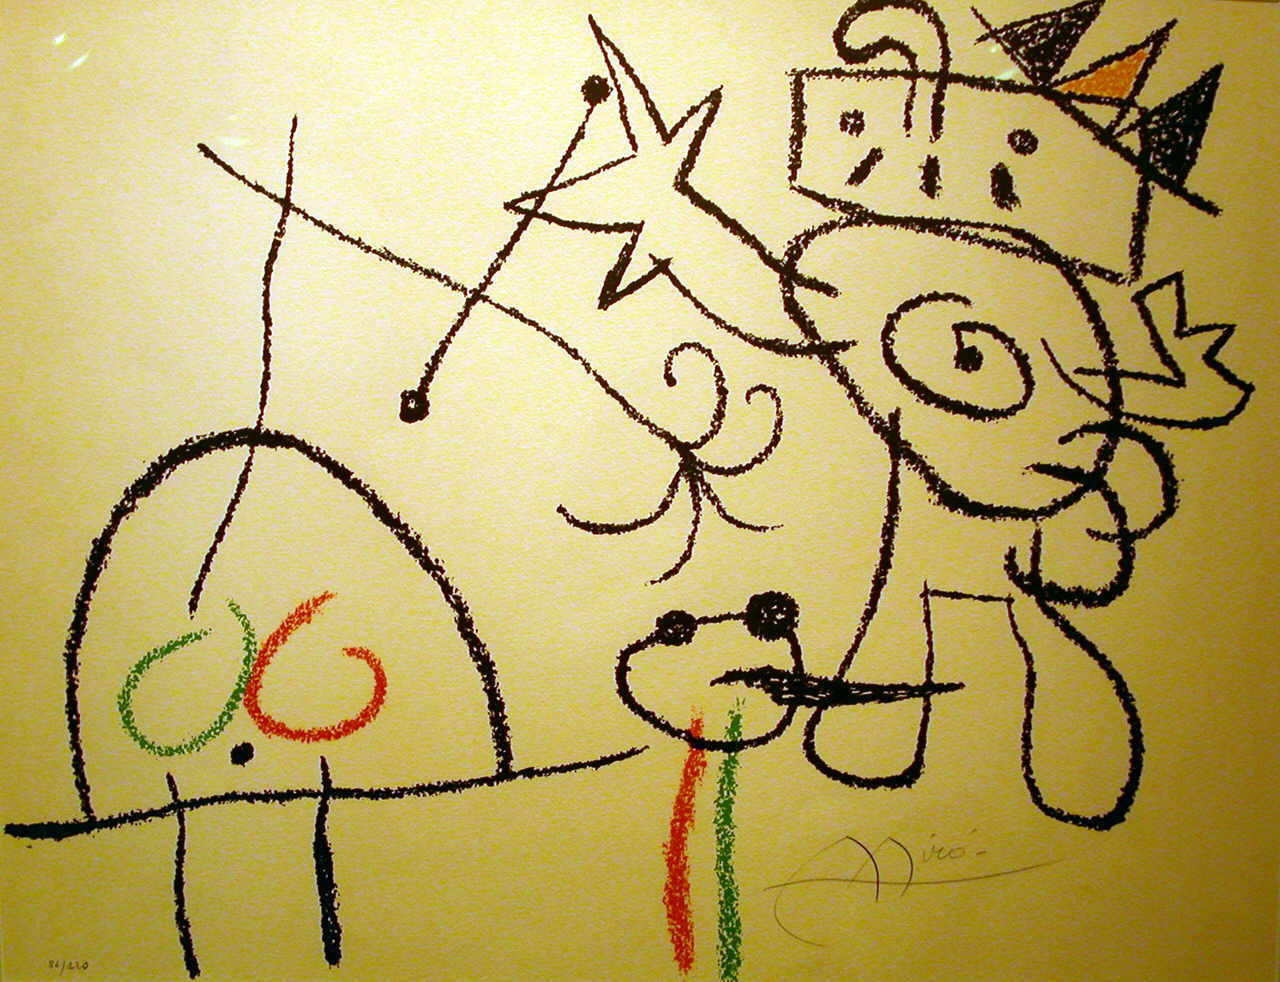 Miró Joan 
Ohne Titel, 1971
Lithographie
50 x 65 cm